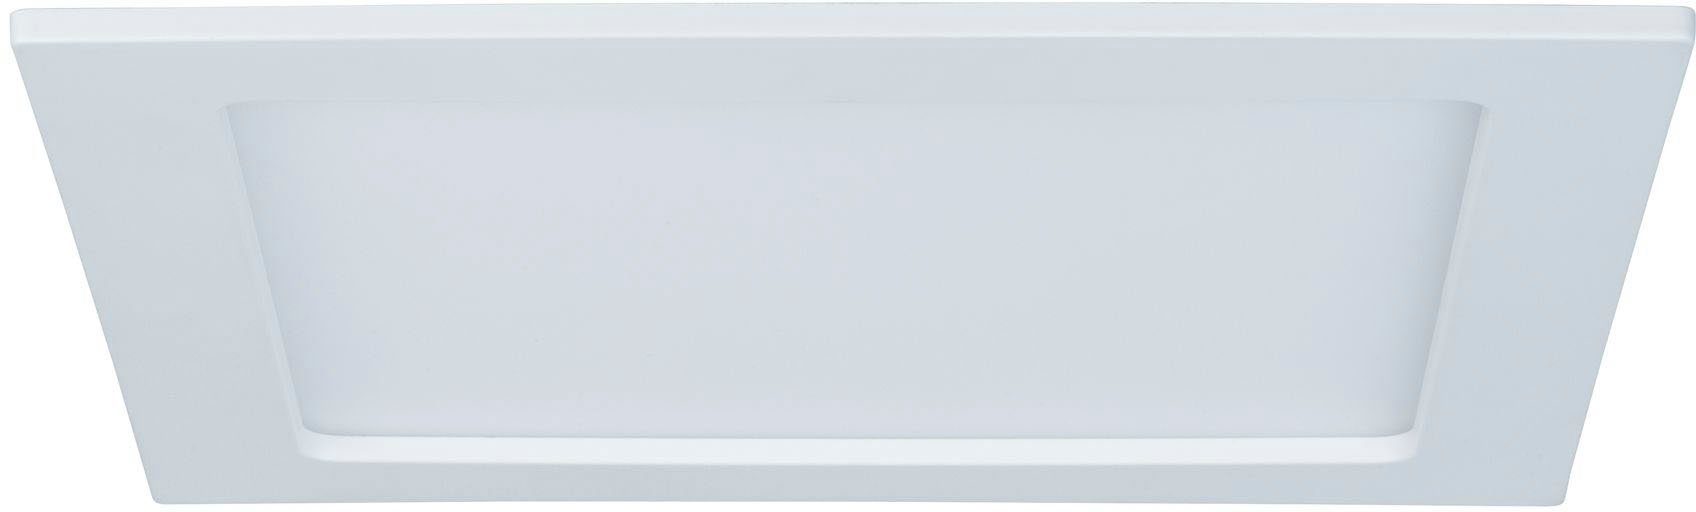 IP44 Dimmbar LED eckig spritzwassergeschützt Neutralweiß, integriert, Weiß Paulmann Panel Deckenleuchte, Badleuchte fest 9W LED